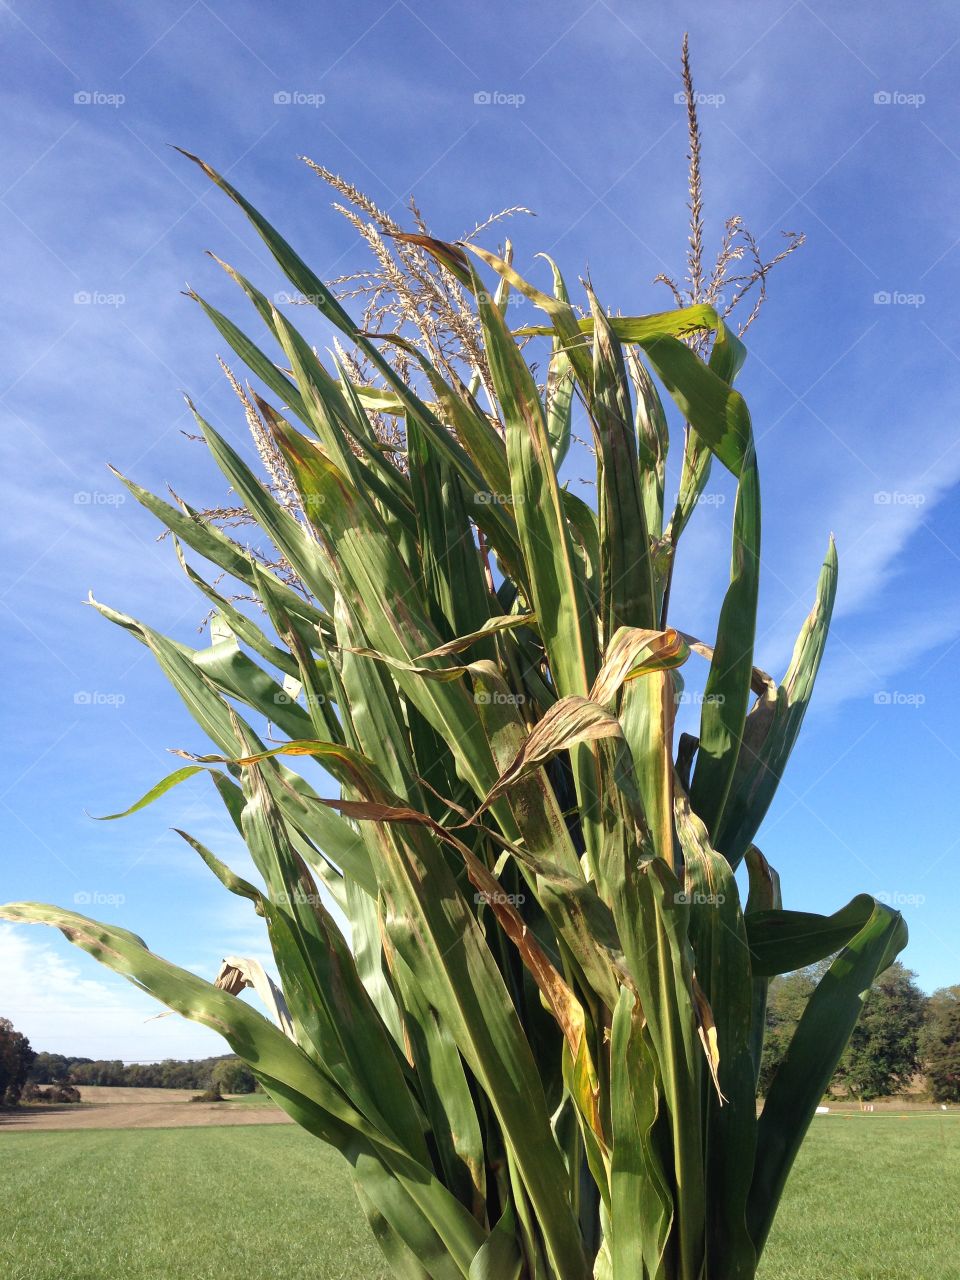 Close-up of corn stalks